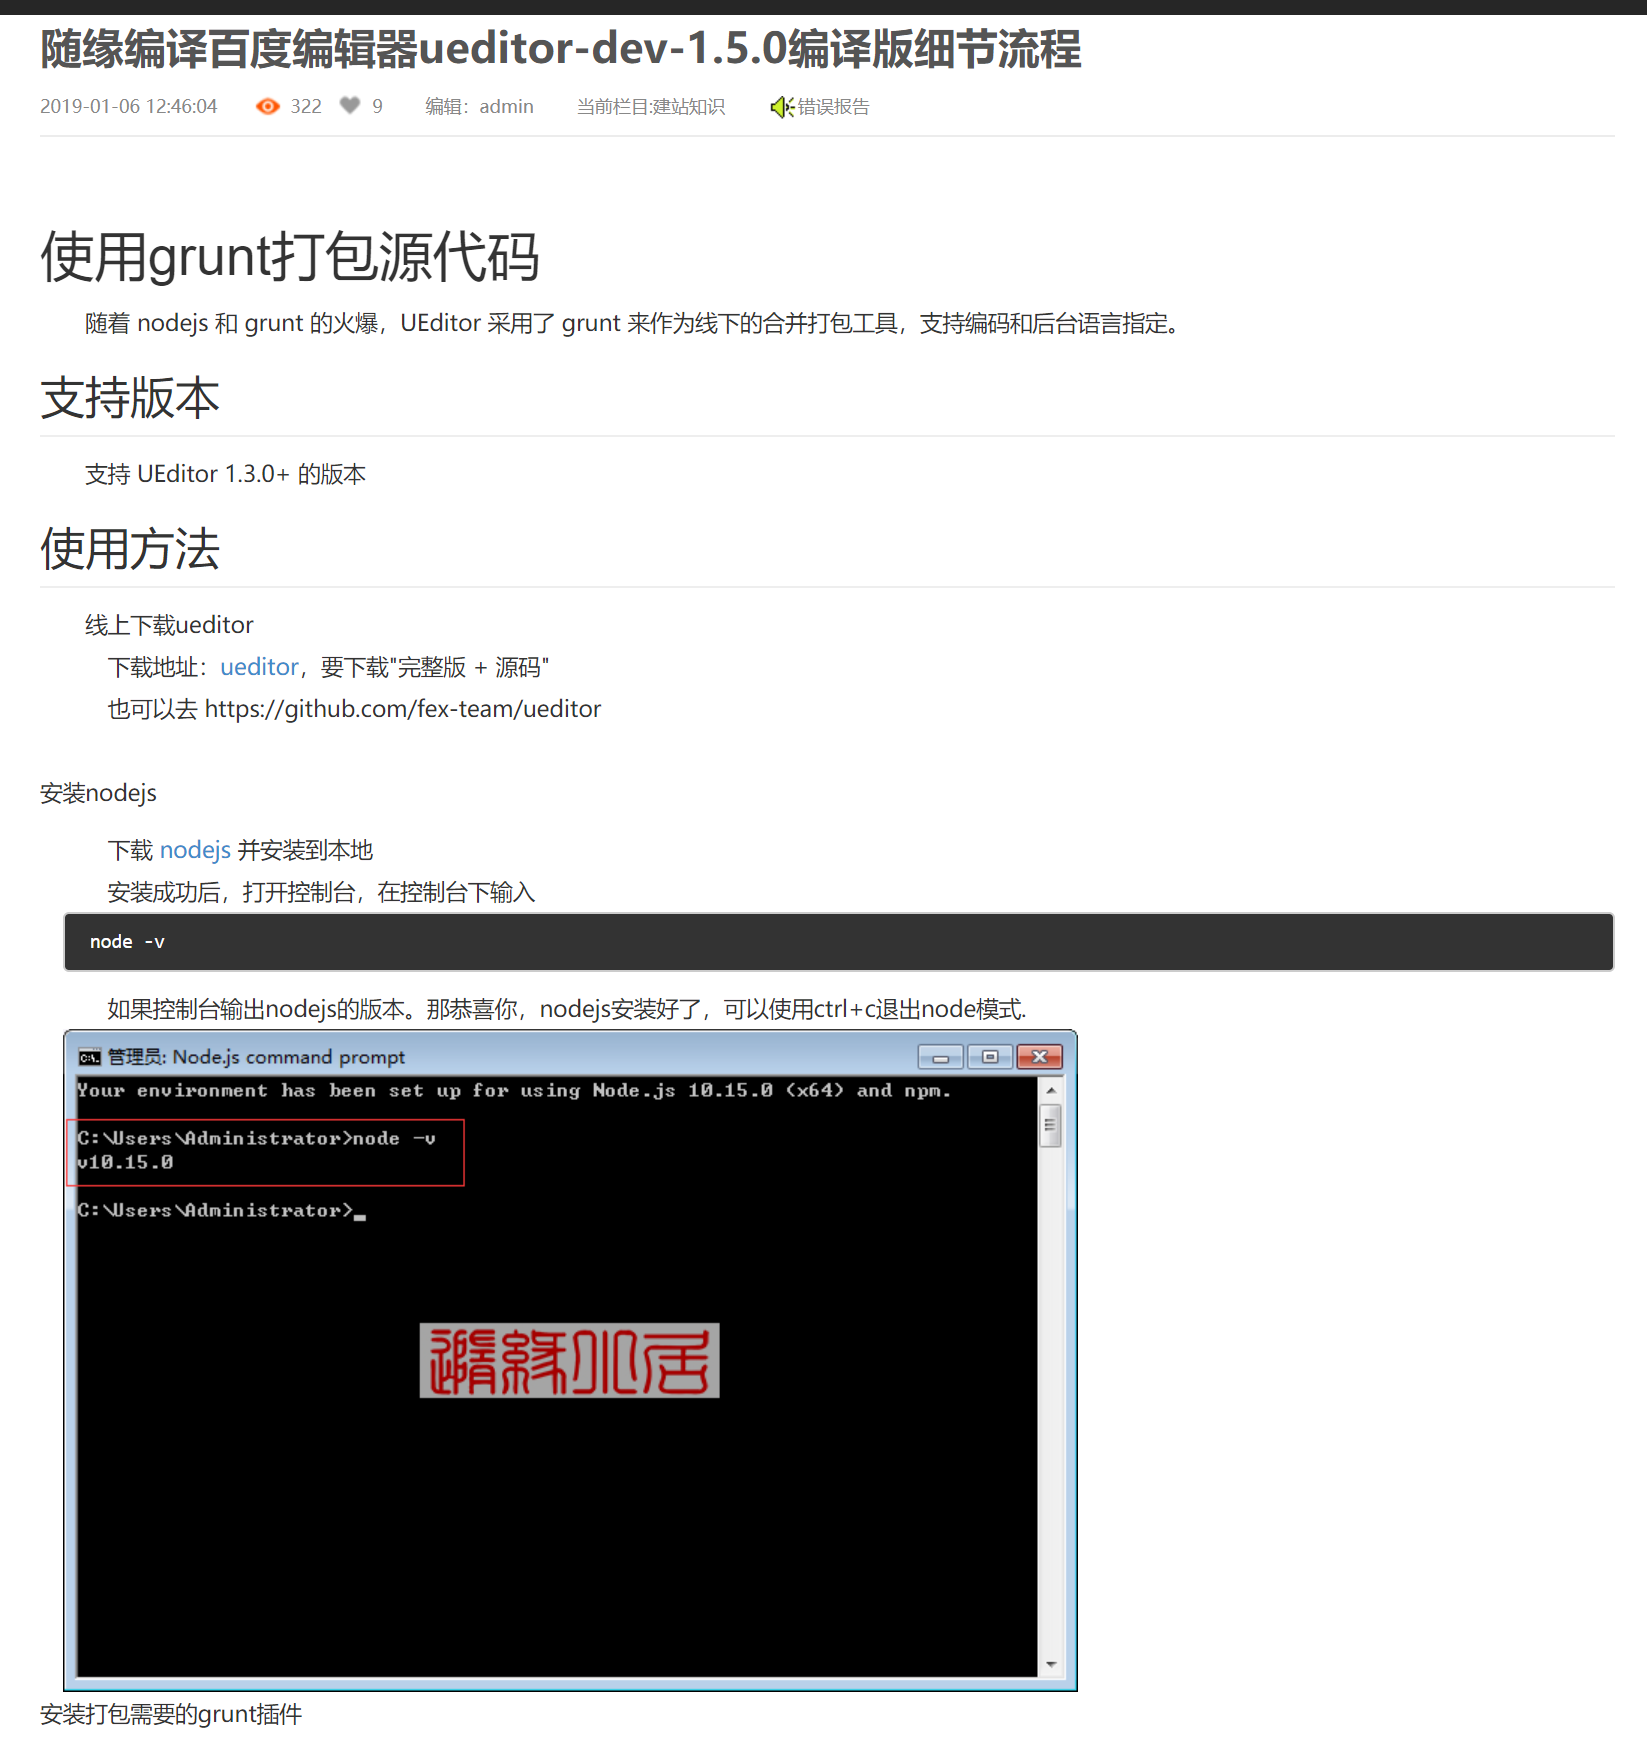 php 百度编辑器ueditor-dev-1.5.0编译版细节流程 - 宋先生日记 - 博客园